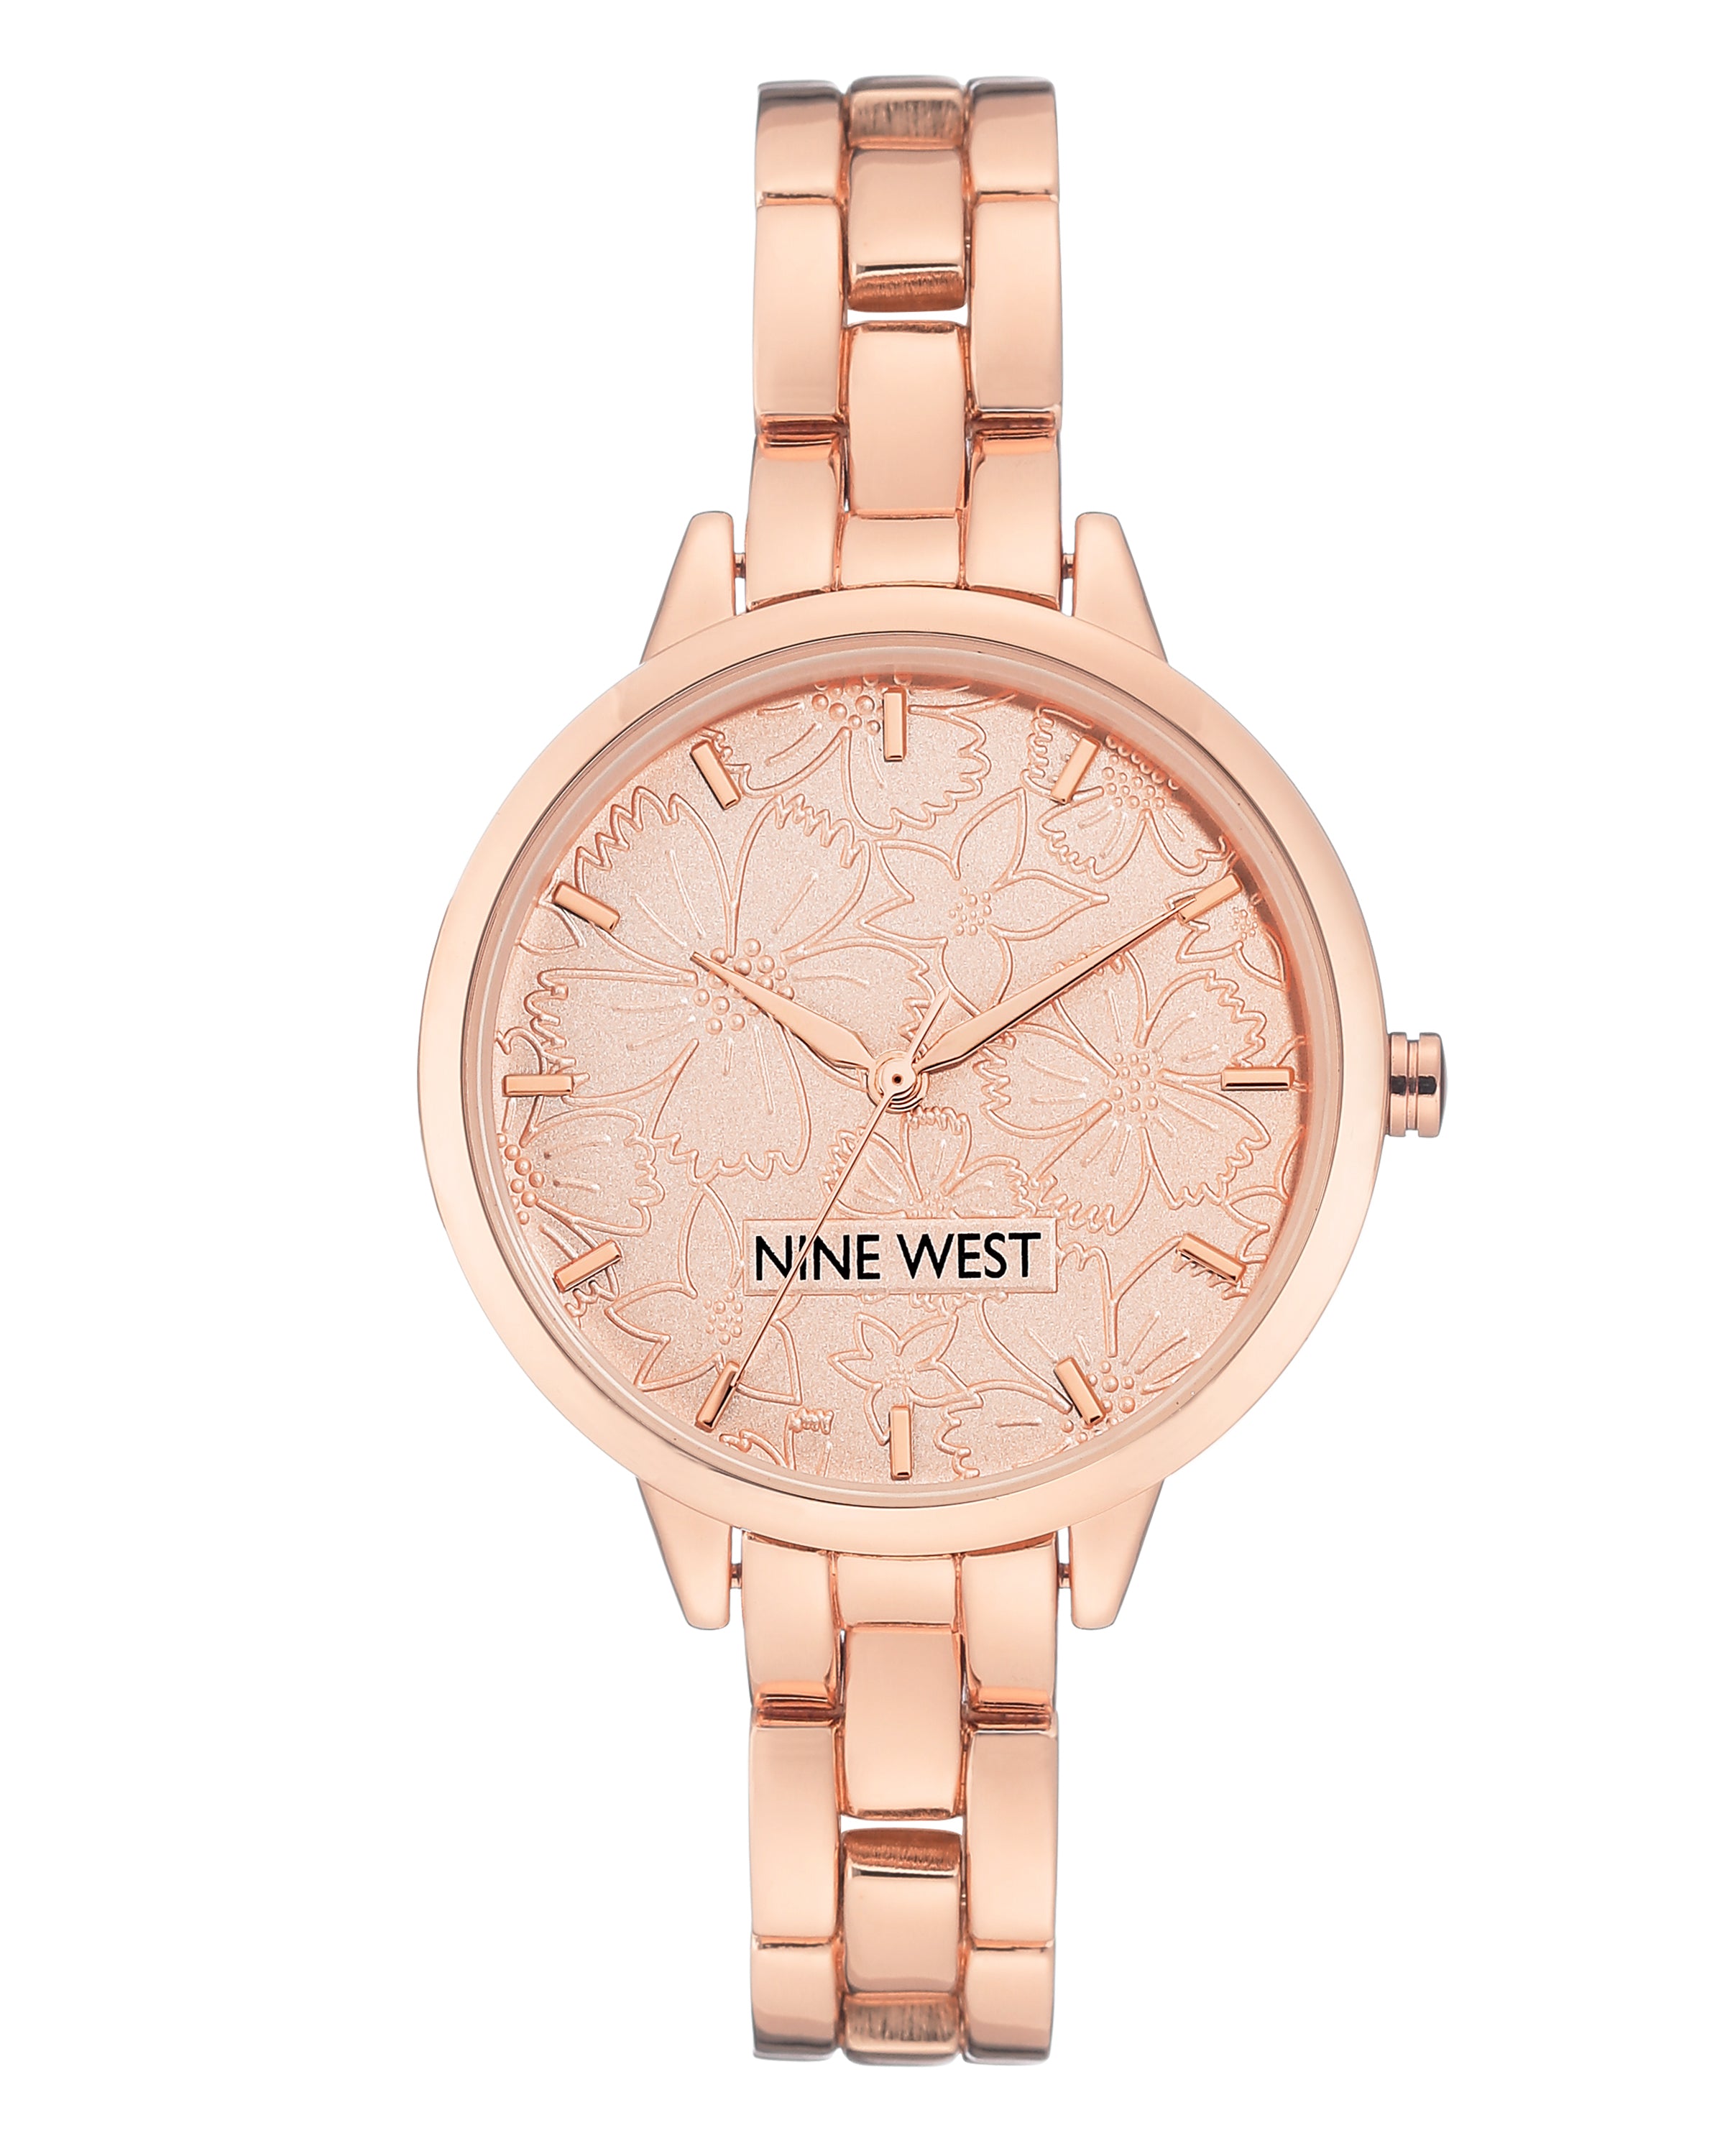 Nine West Women's Watches